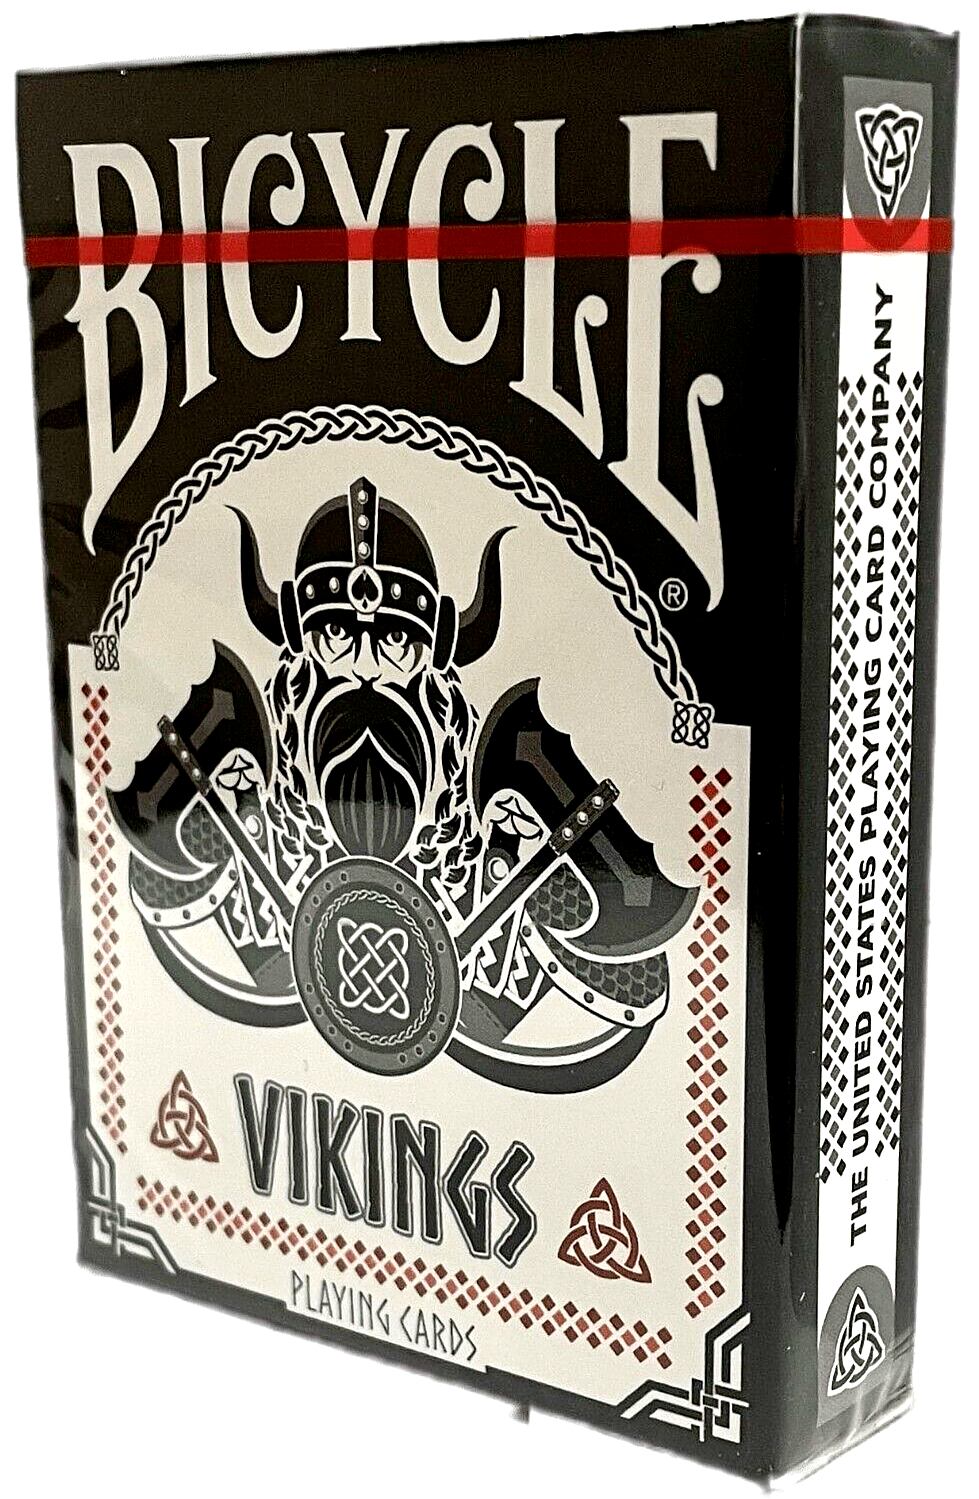 Vikings Bicycle Playing Cards